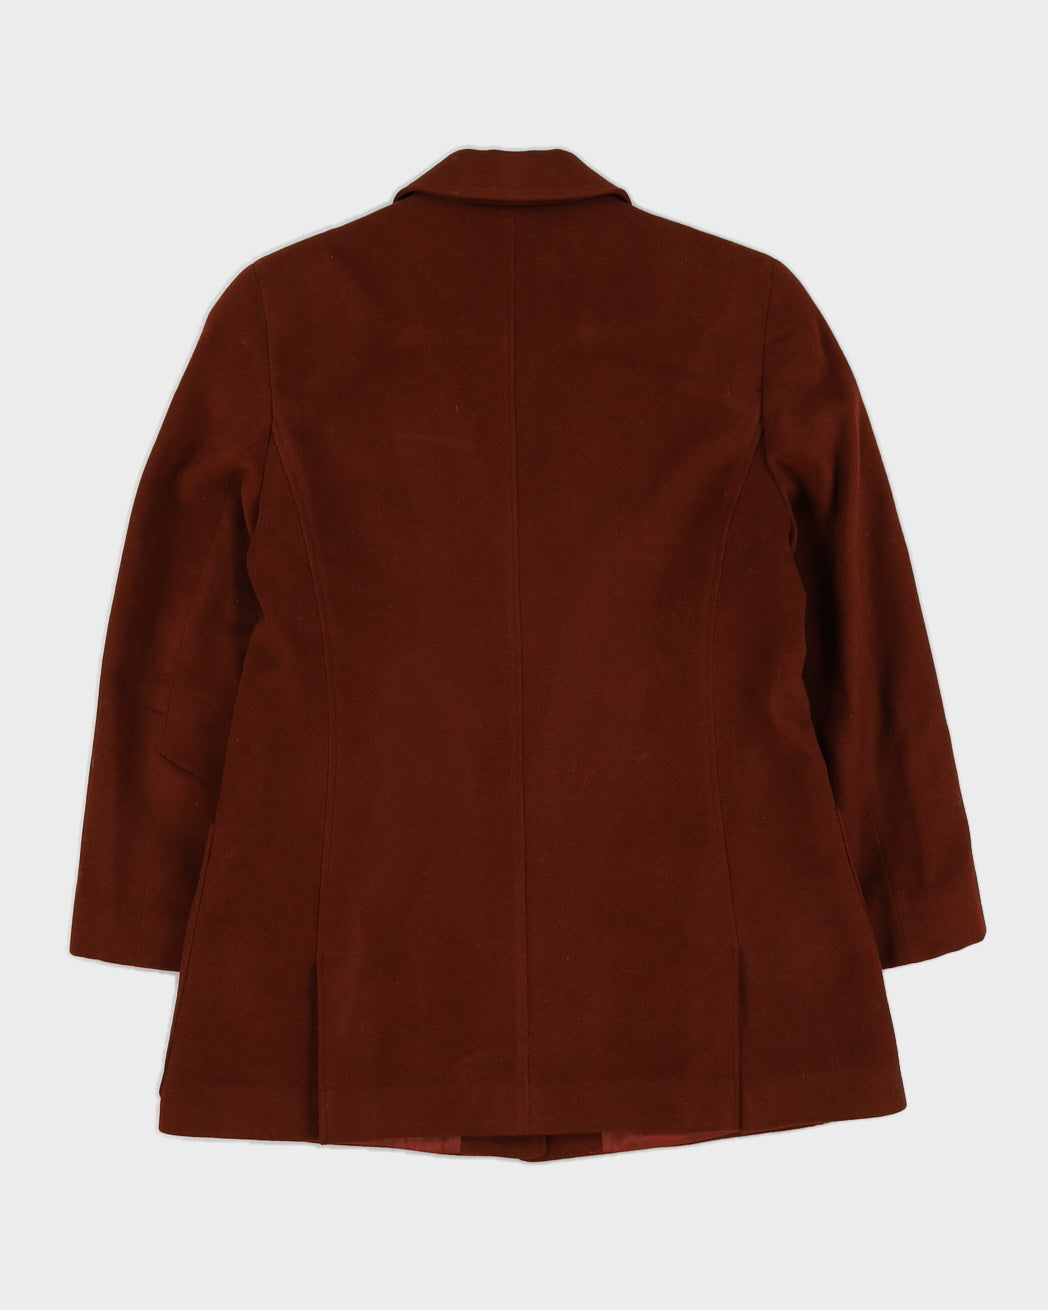 Louis Feraud Contraire Brown Wool Jacket - S